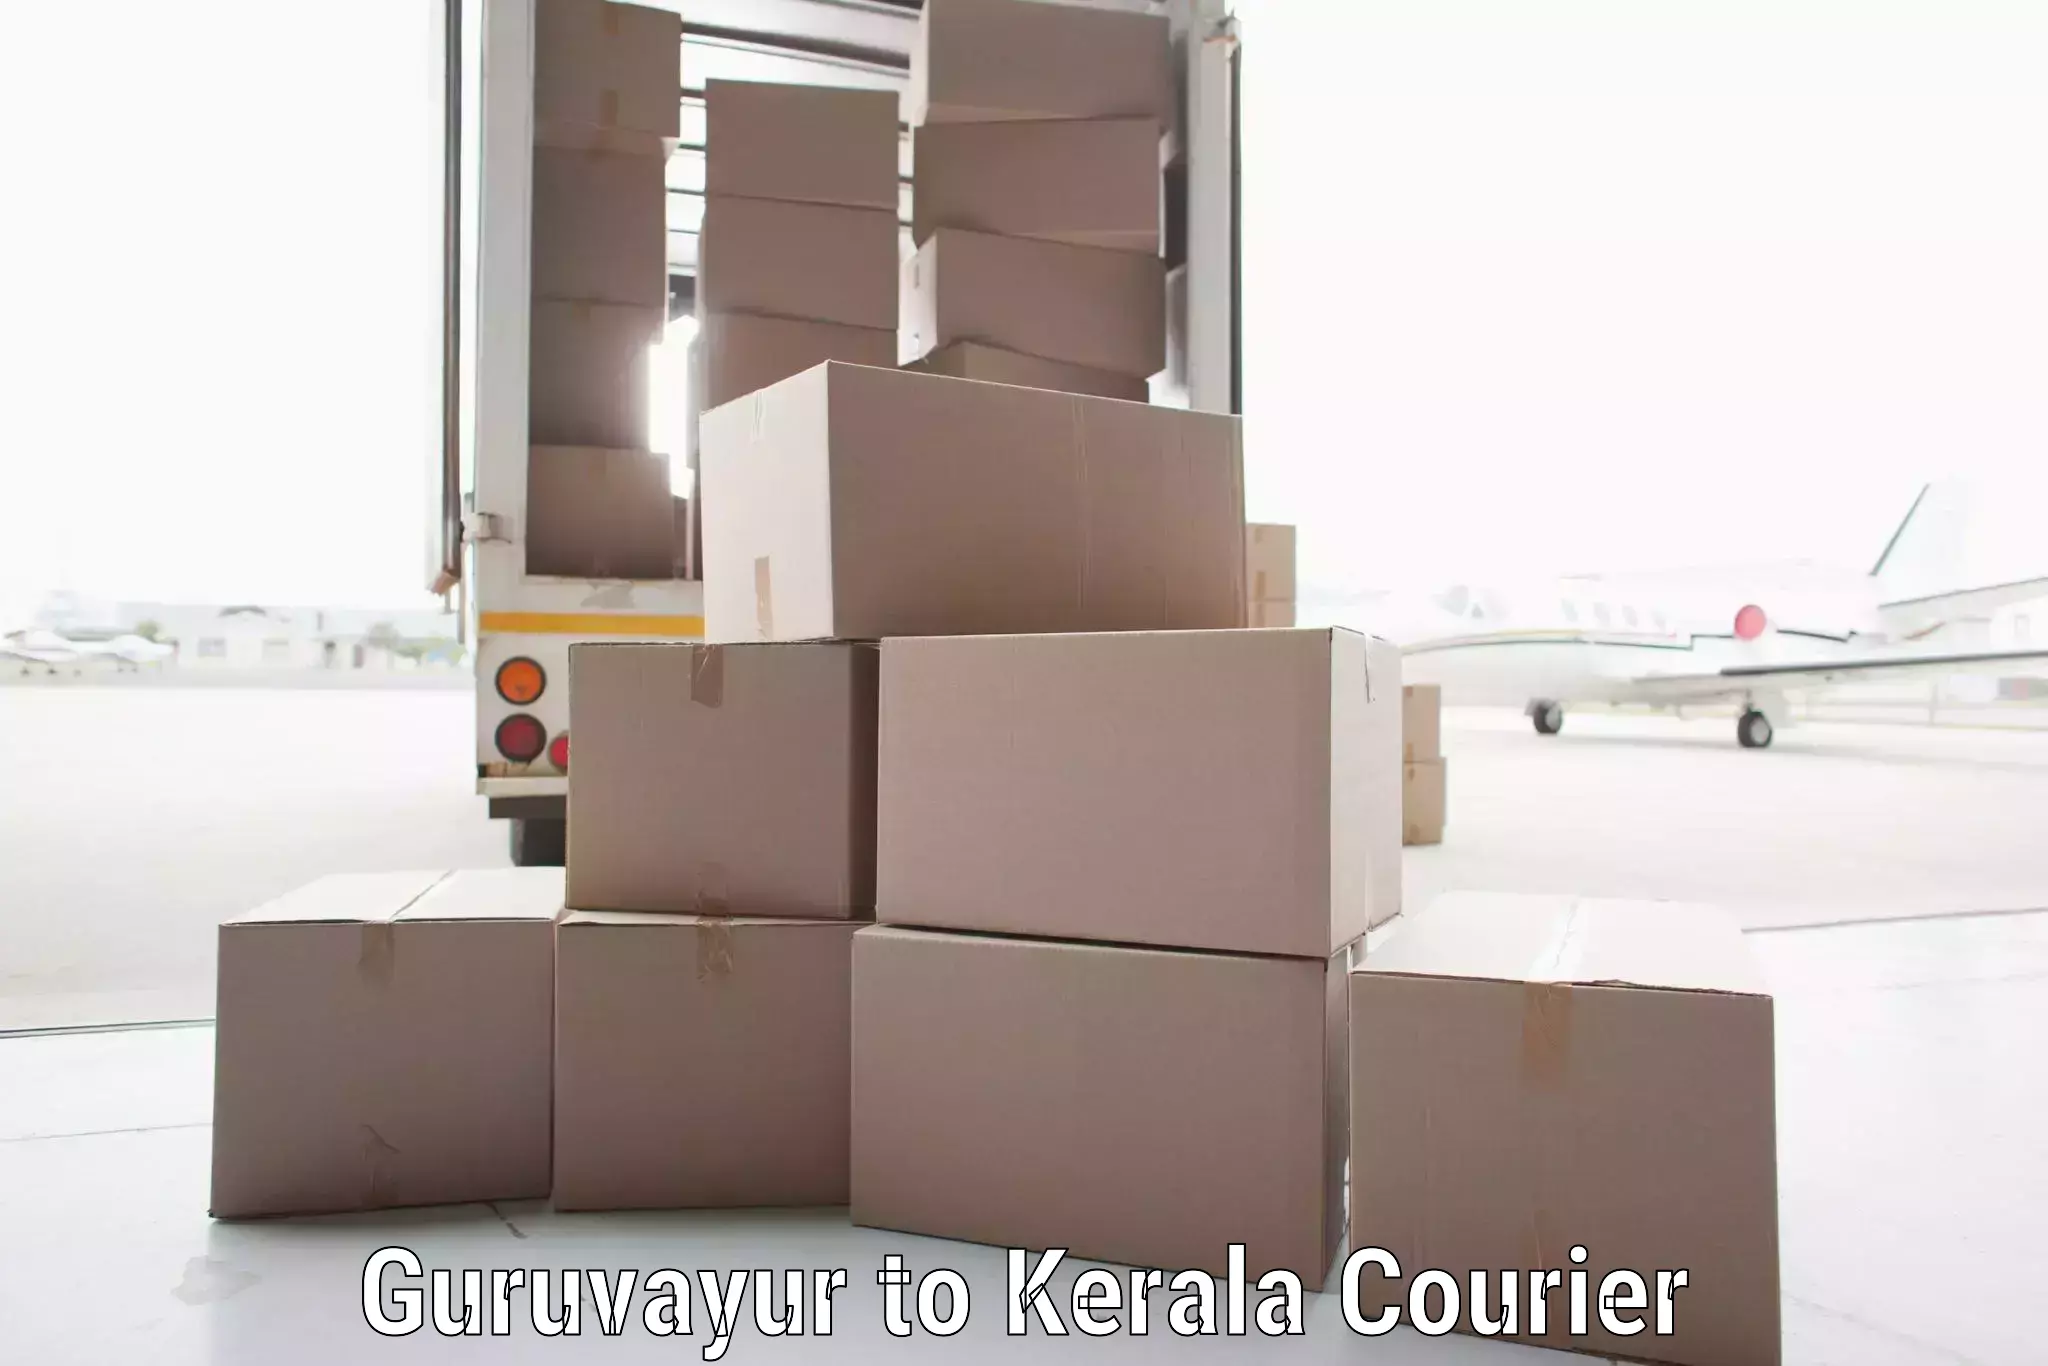 Customer-focused courier Guruvayur to Kerala